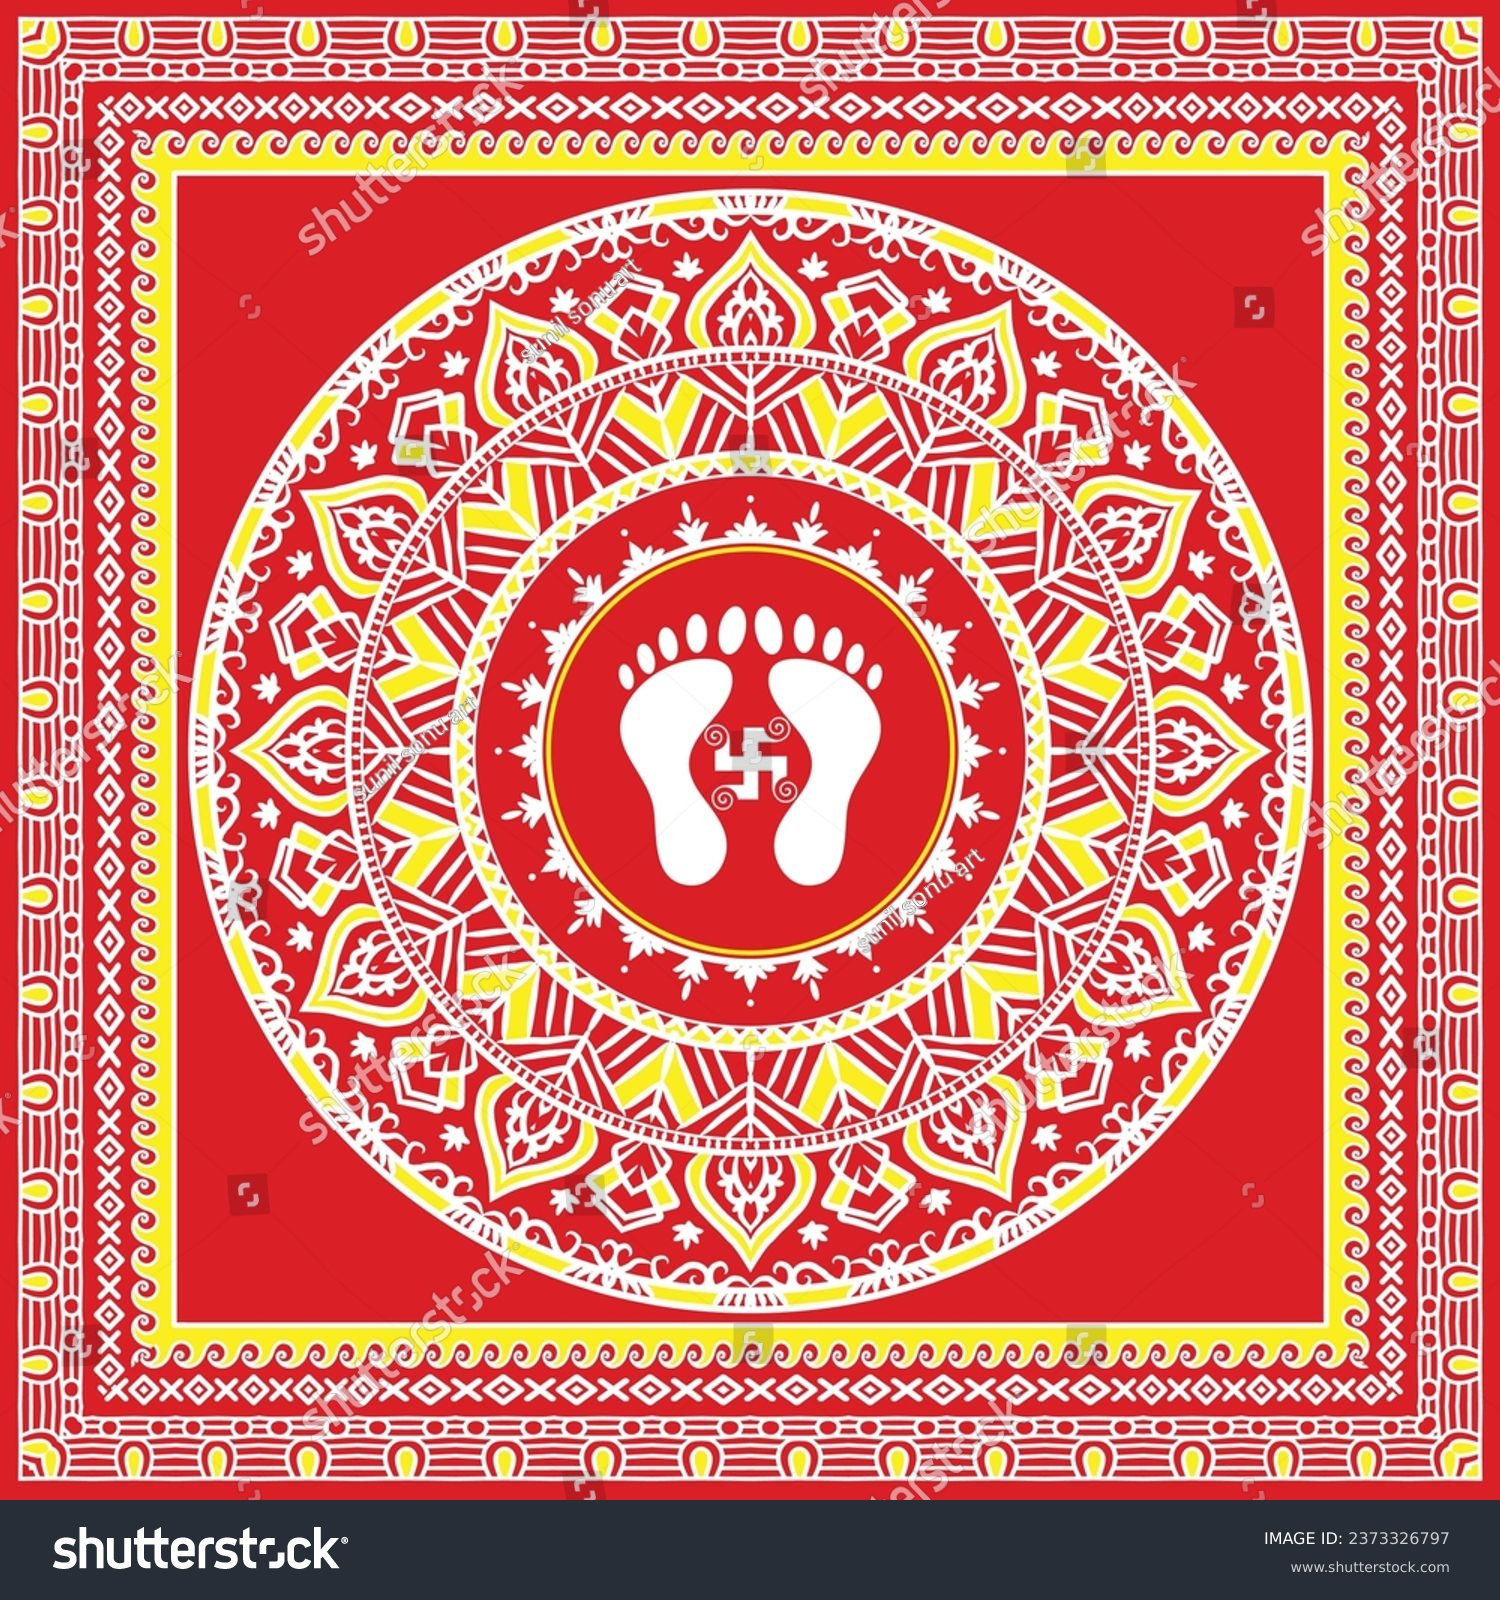 SVG of Aipan art traditional folk art, Maa laxmi footprint graphic with mandala pattern Design, Aipan art with lakshmi footprint, svg